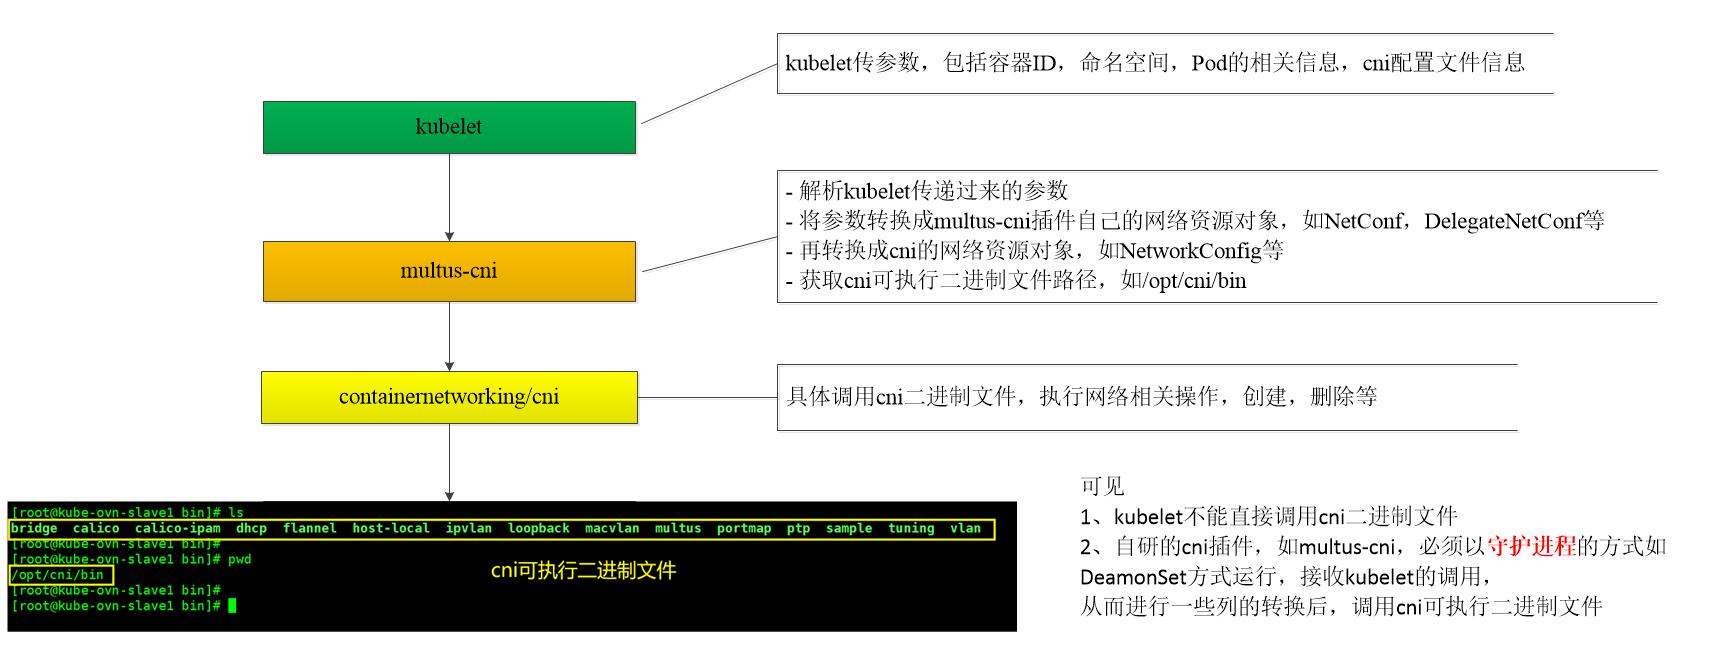 kubelet与cni可执行二进制文件的调用关系.jpg